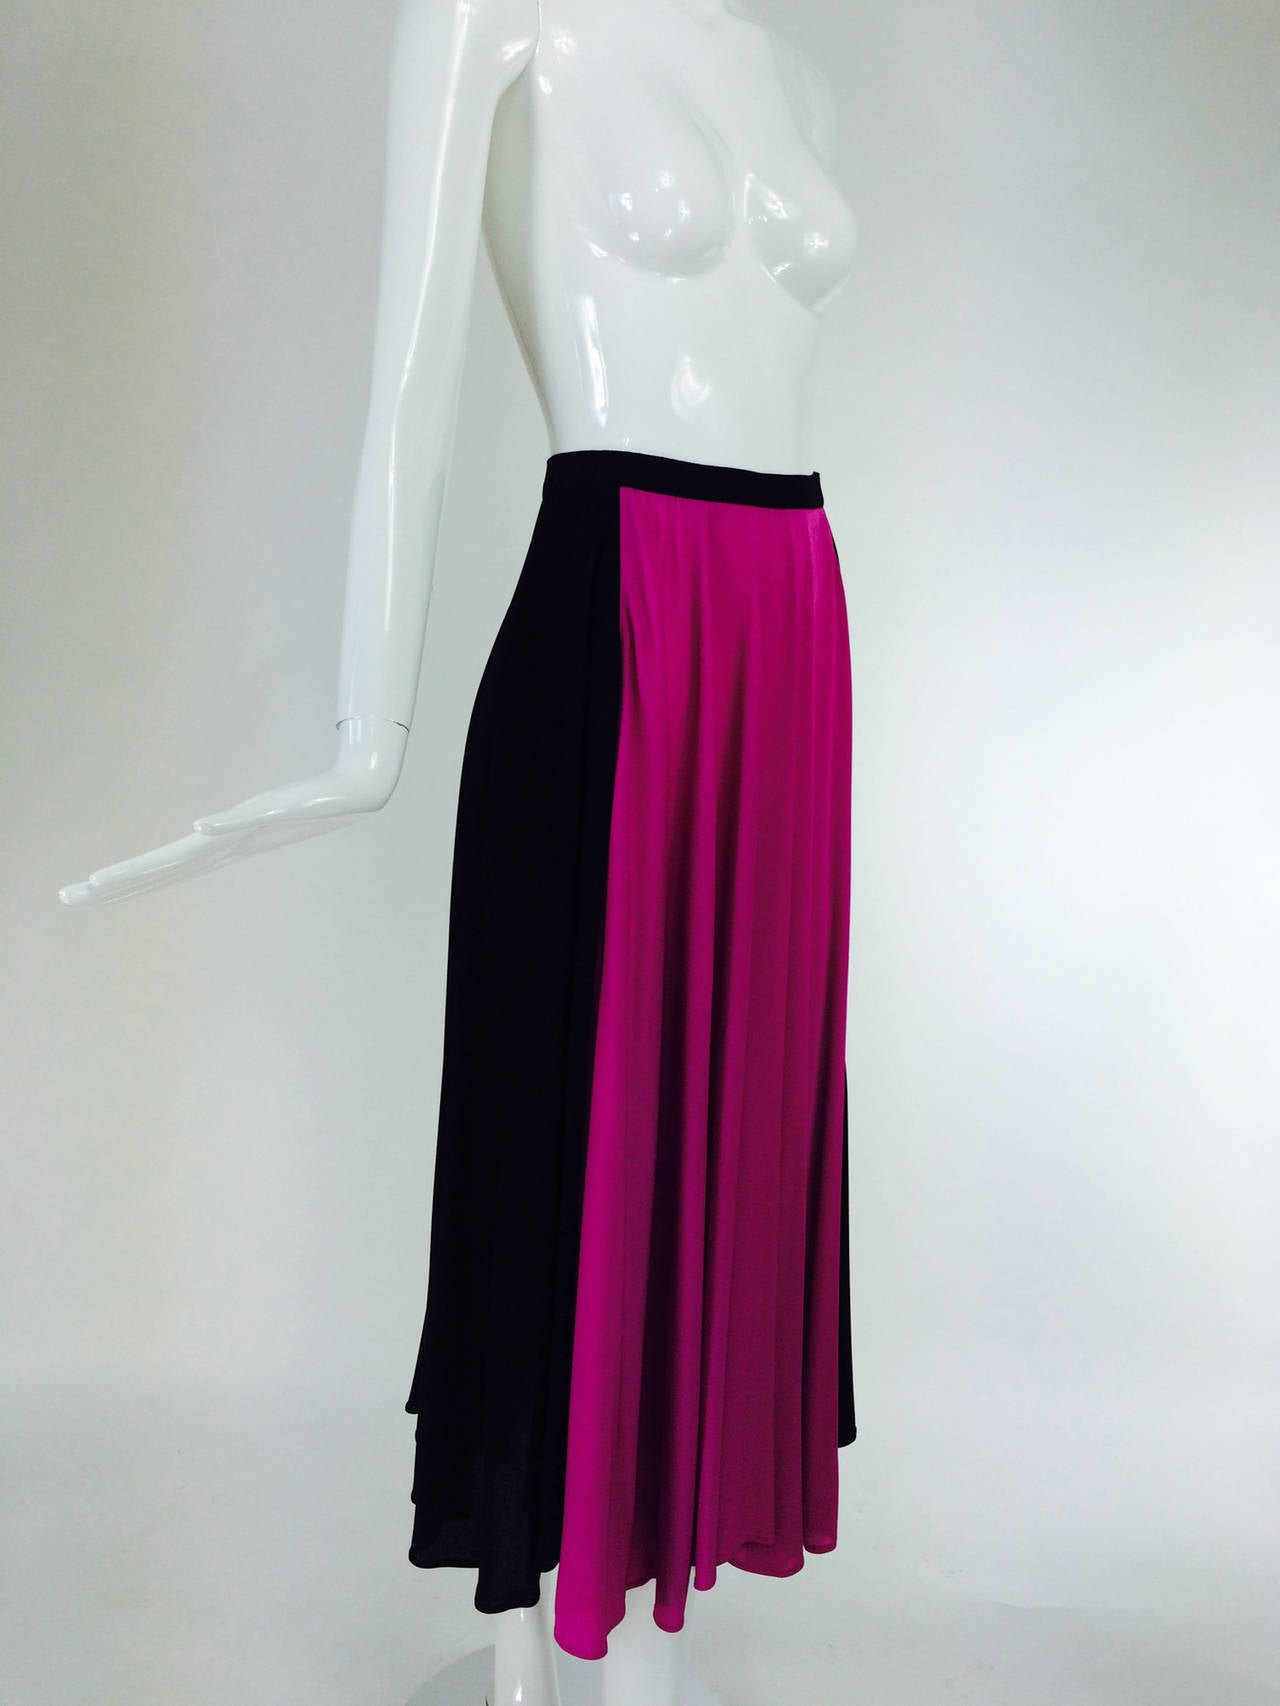 Yves St Laurent YSL  Rive Gauche black & hot pink jersey skirt 1970s 1